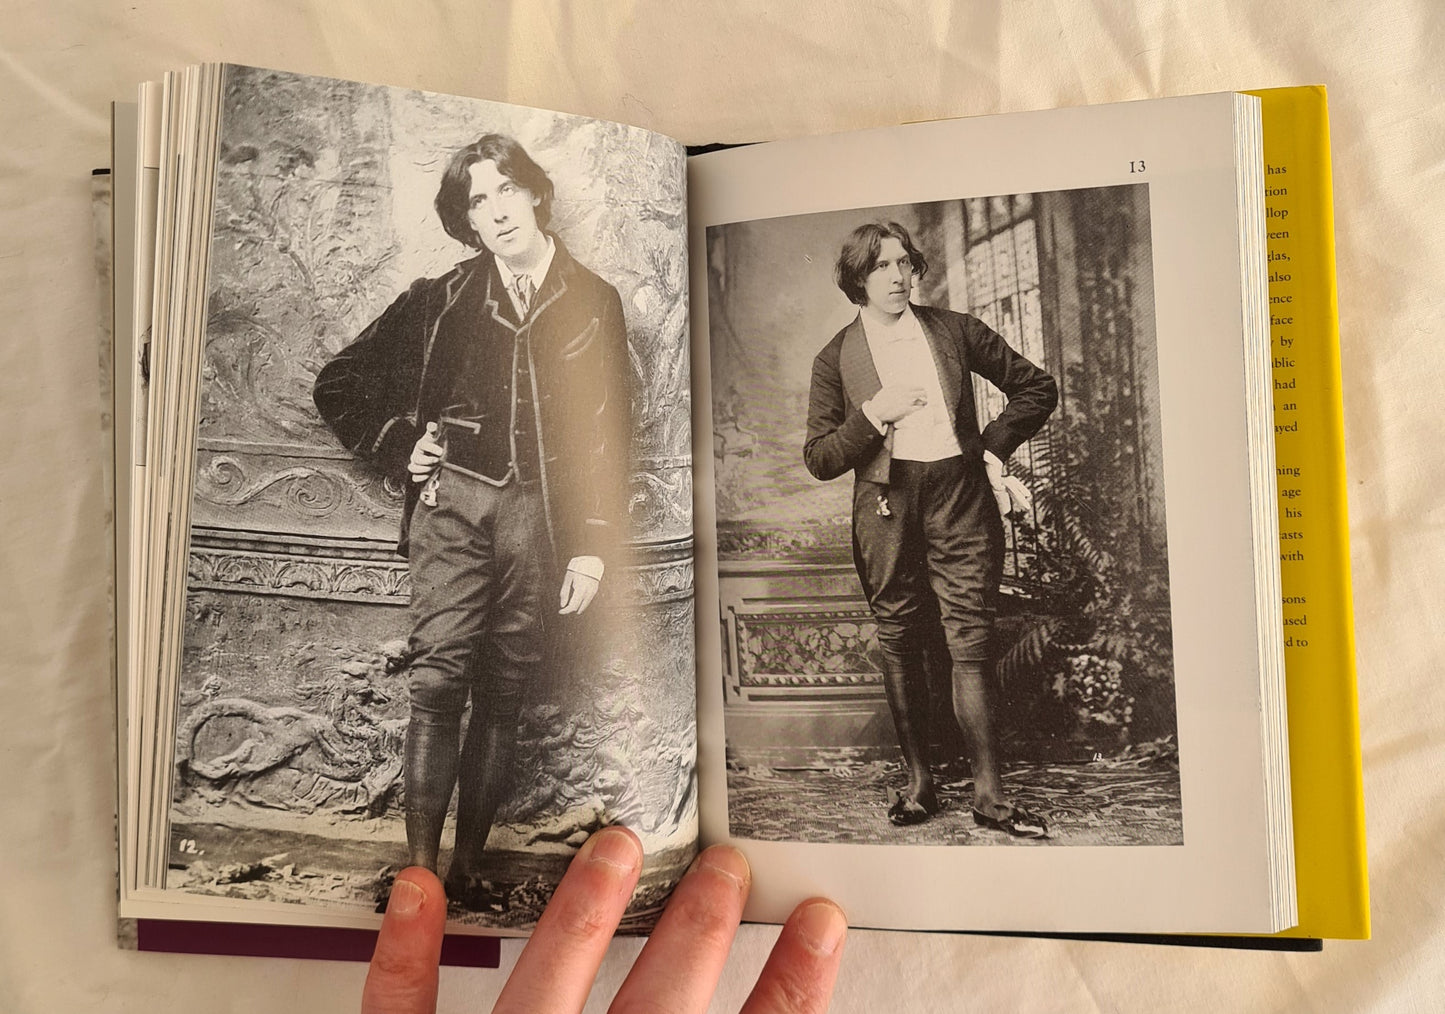 The Wilde Album by Merlin Holland